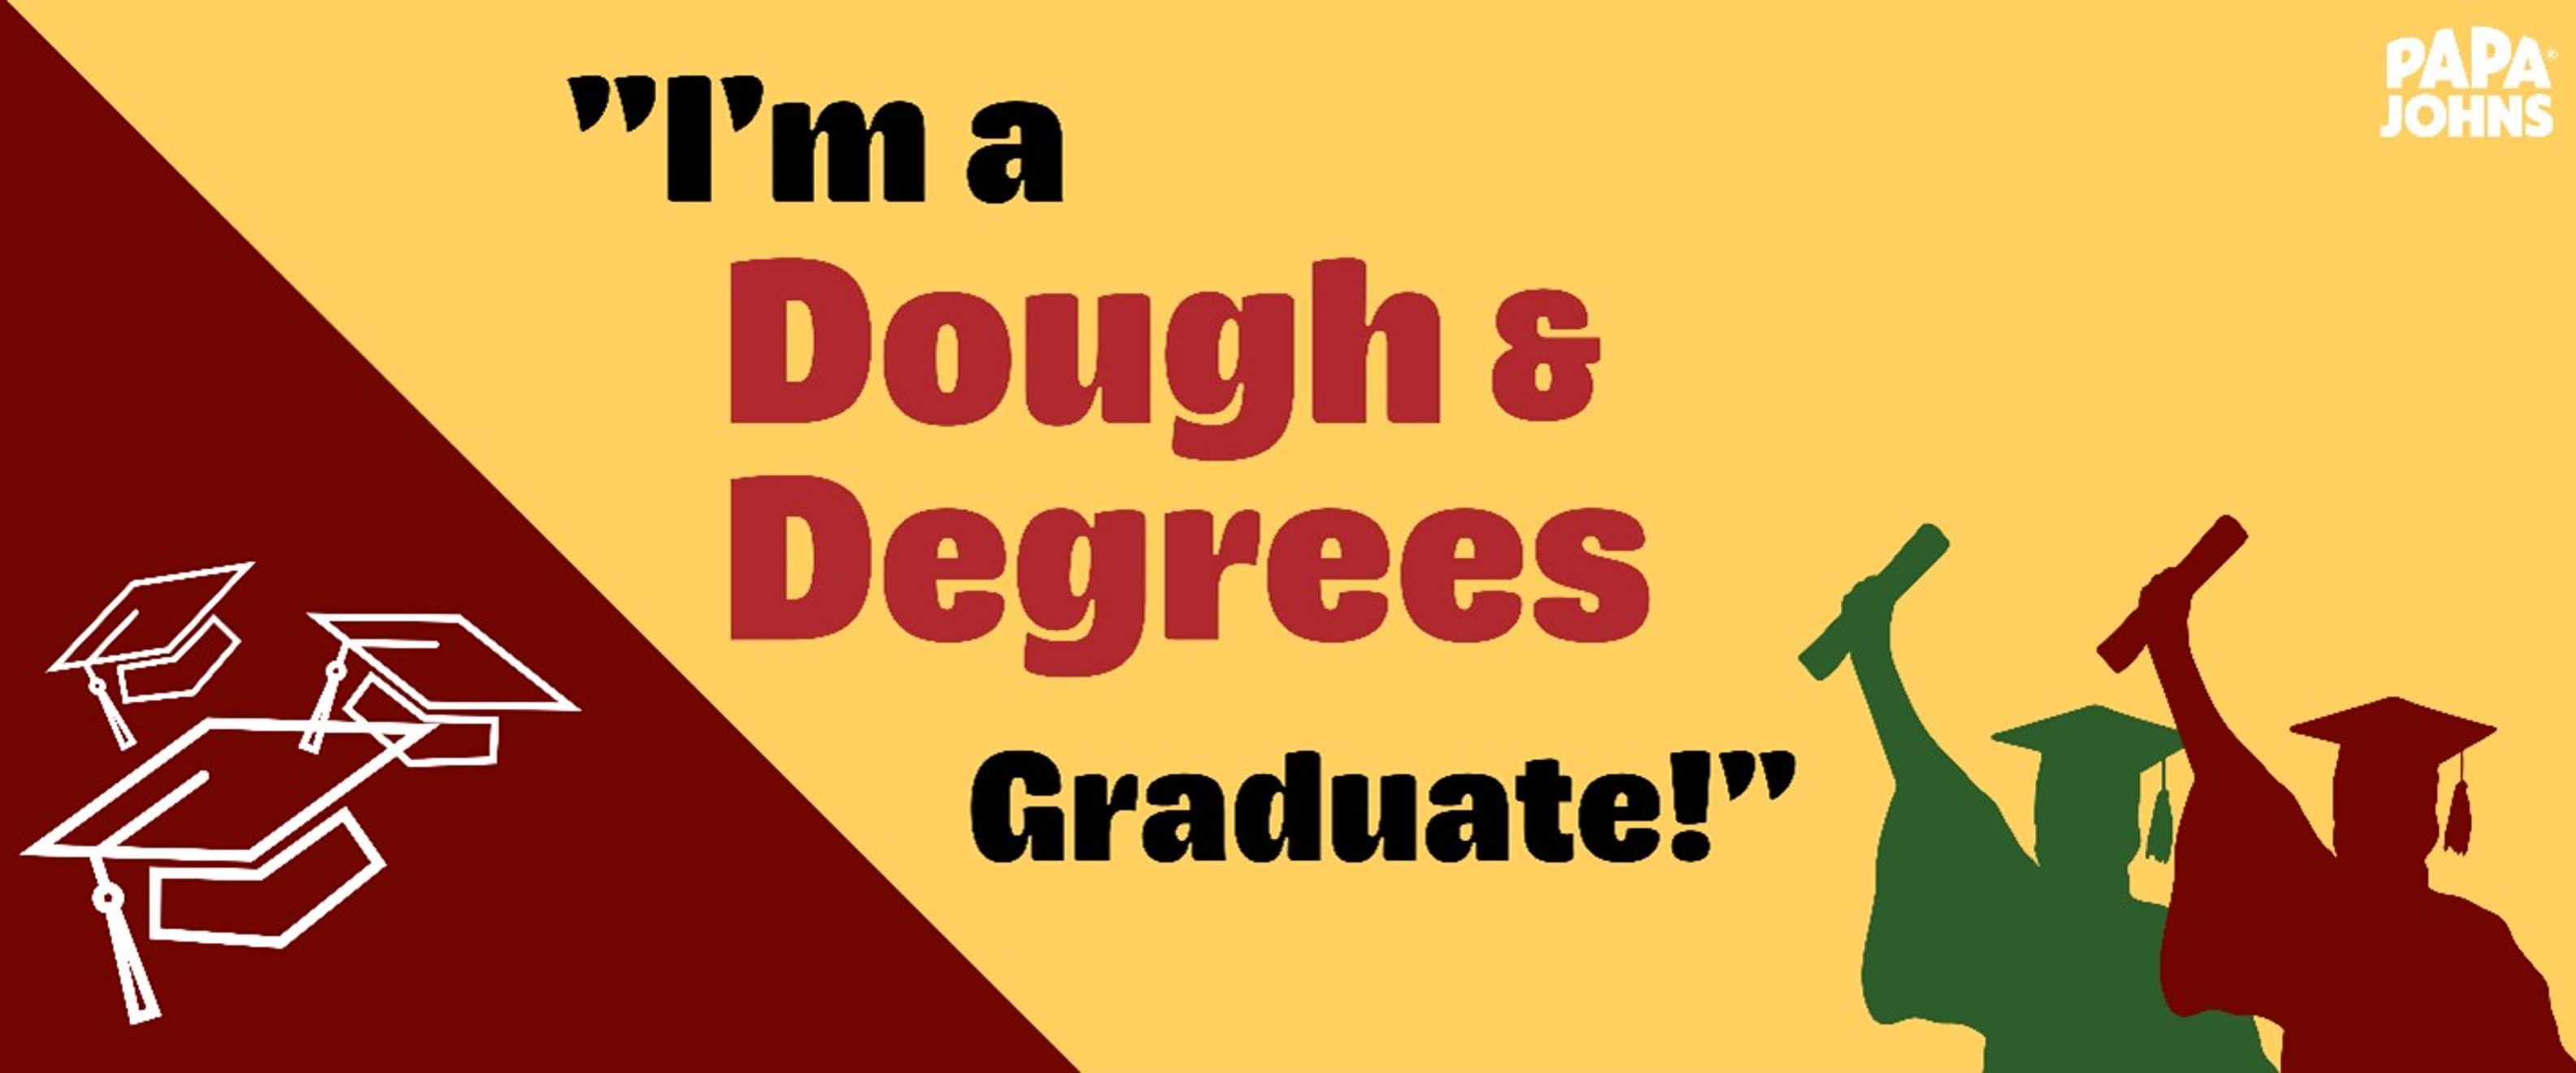 I'm a Dough & Degrees Graduate!"